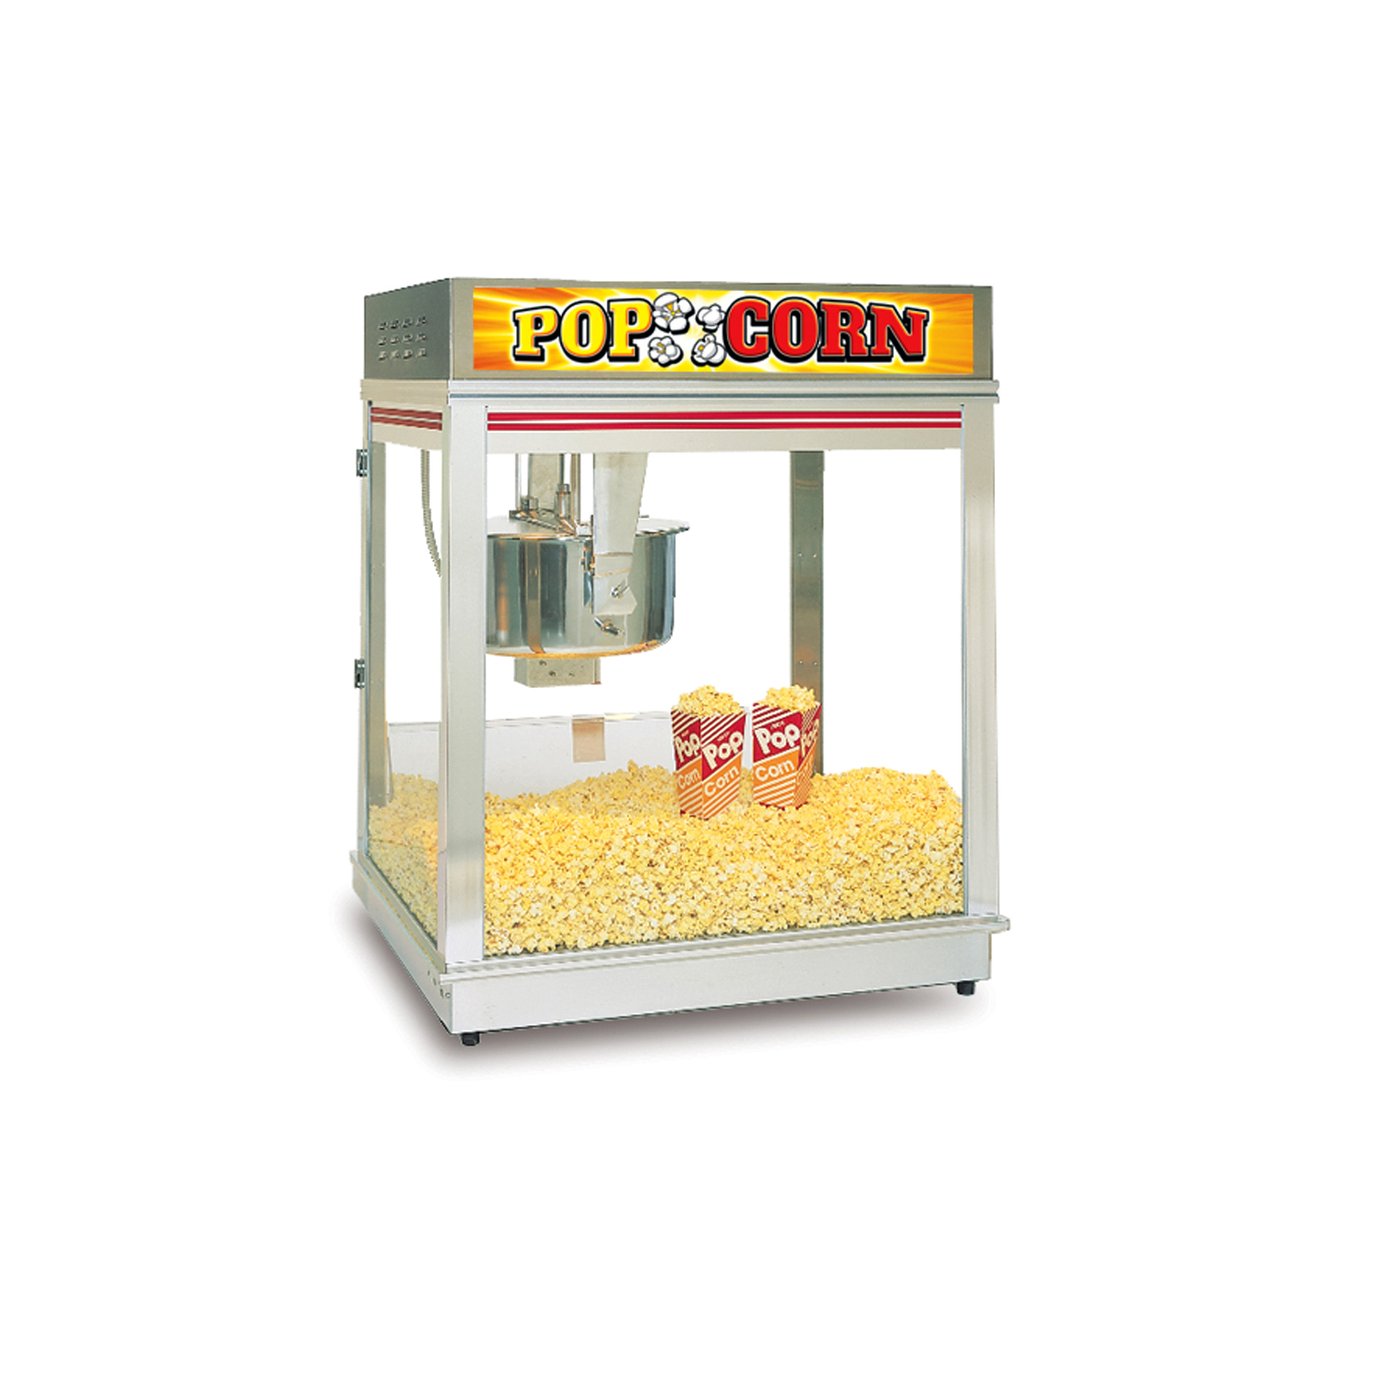 Gold Medal 2786-00-000 ReadyPop Popcorn Popper Countertop 16 oz.